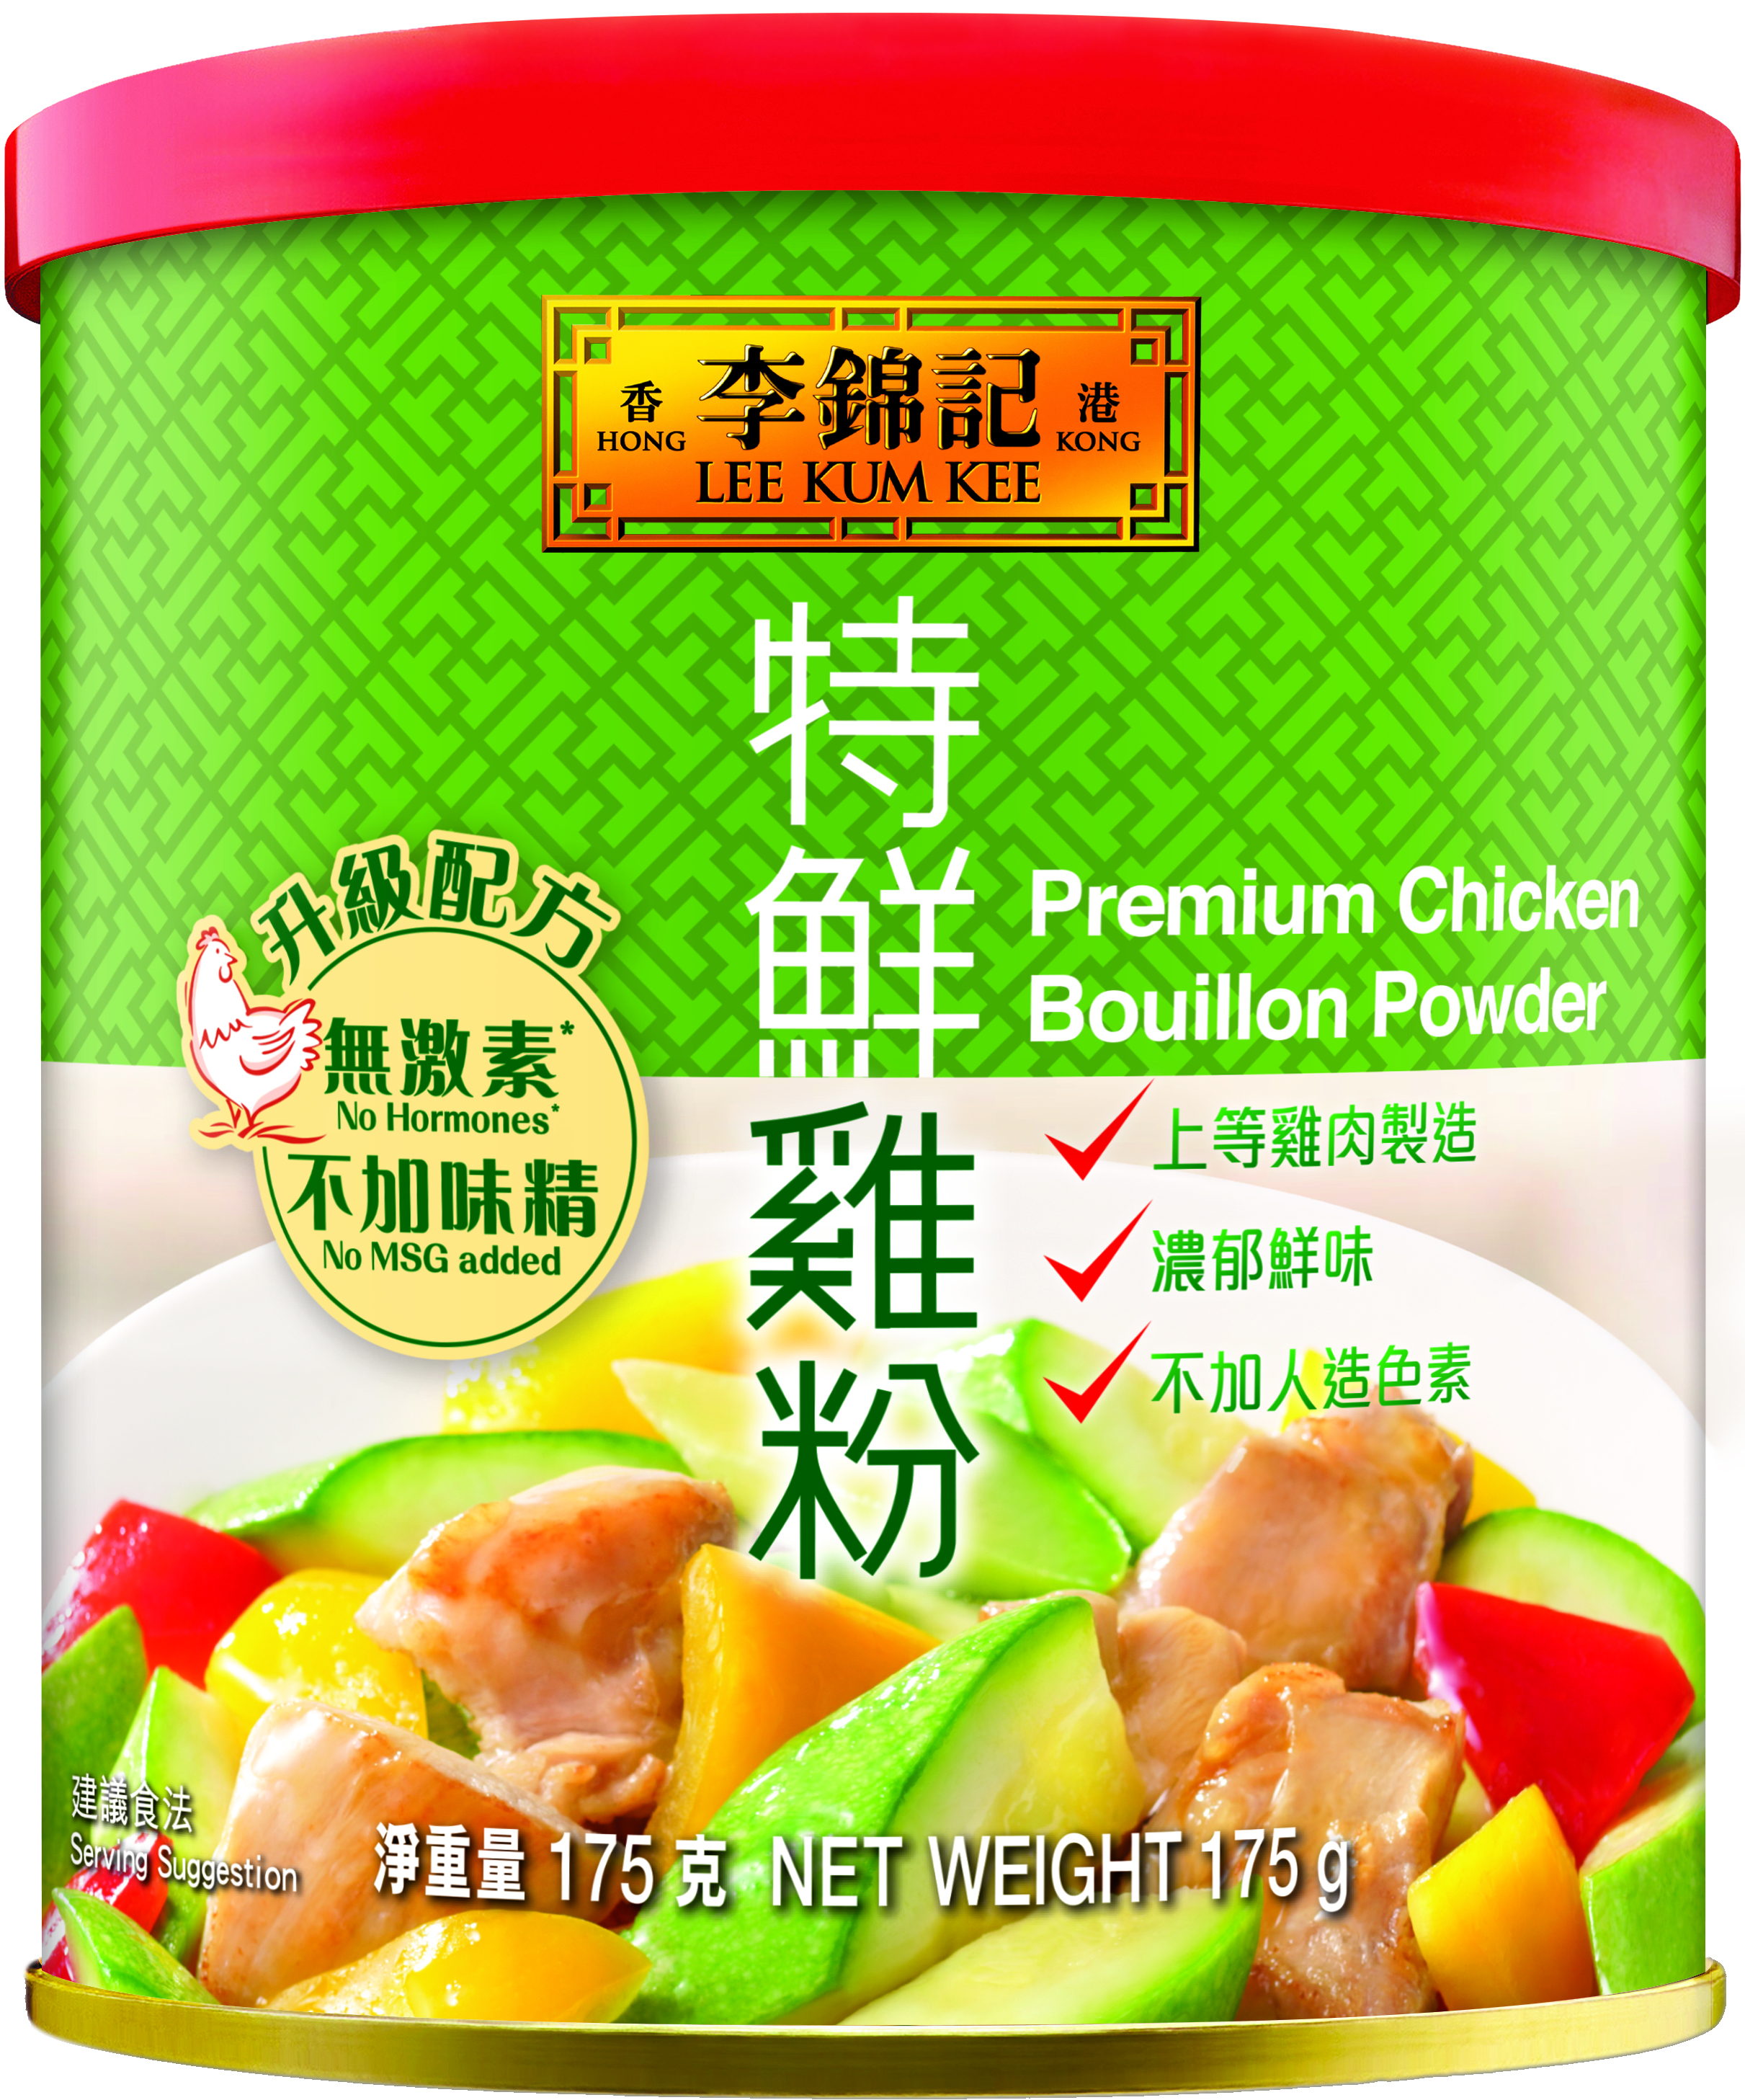 No Hormones* Premium Chicken Bouillon Powder 175g